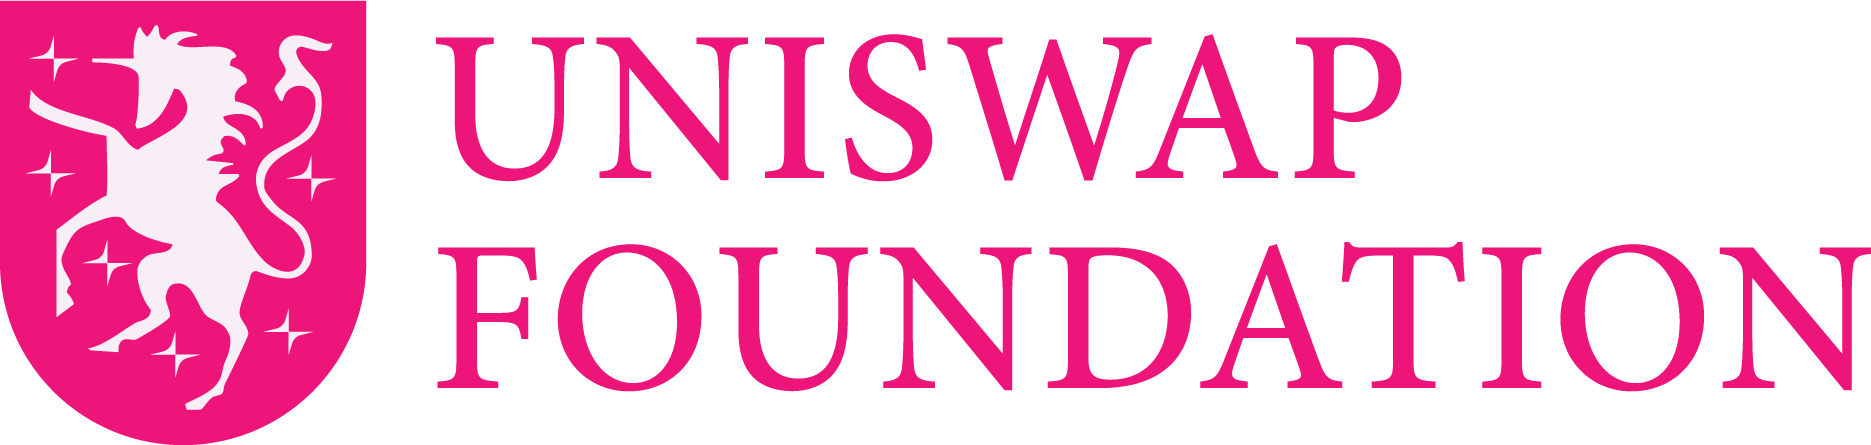 Uniswap foundation logo